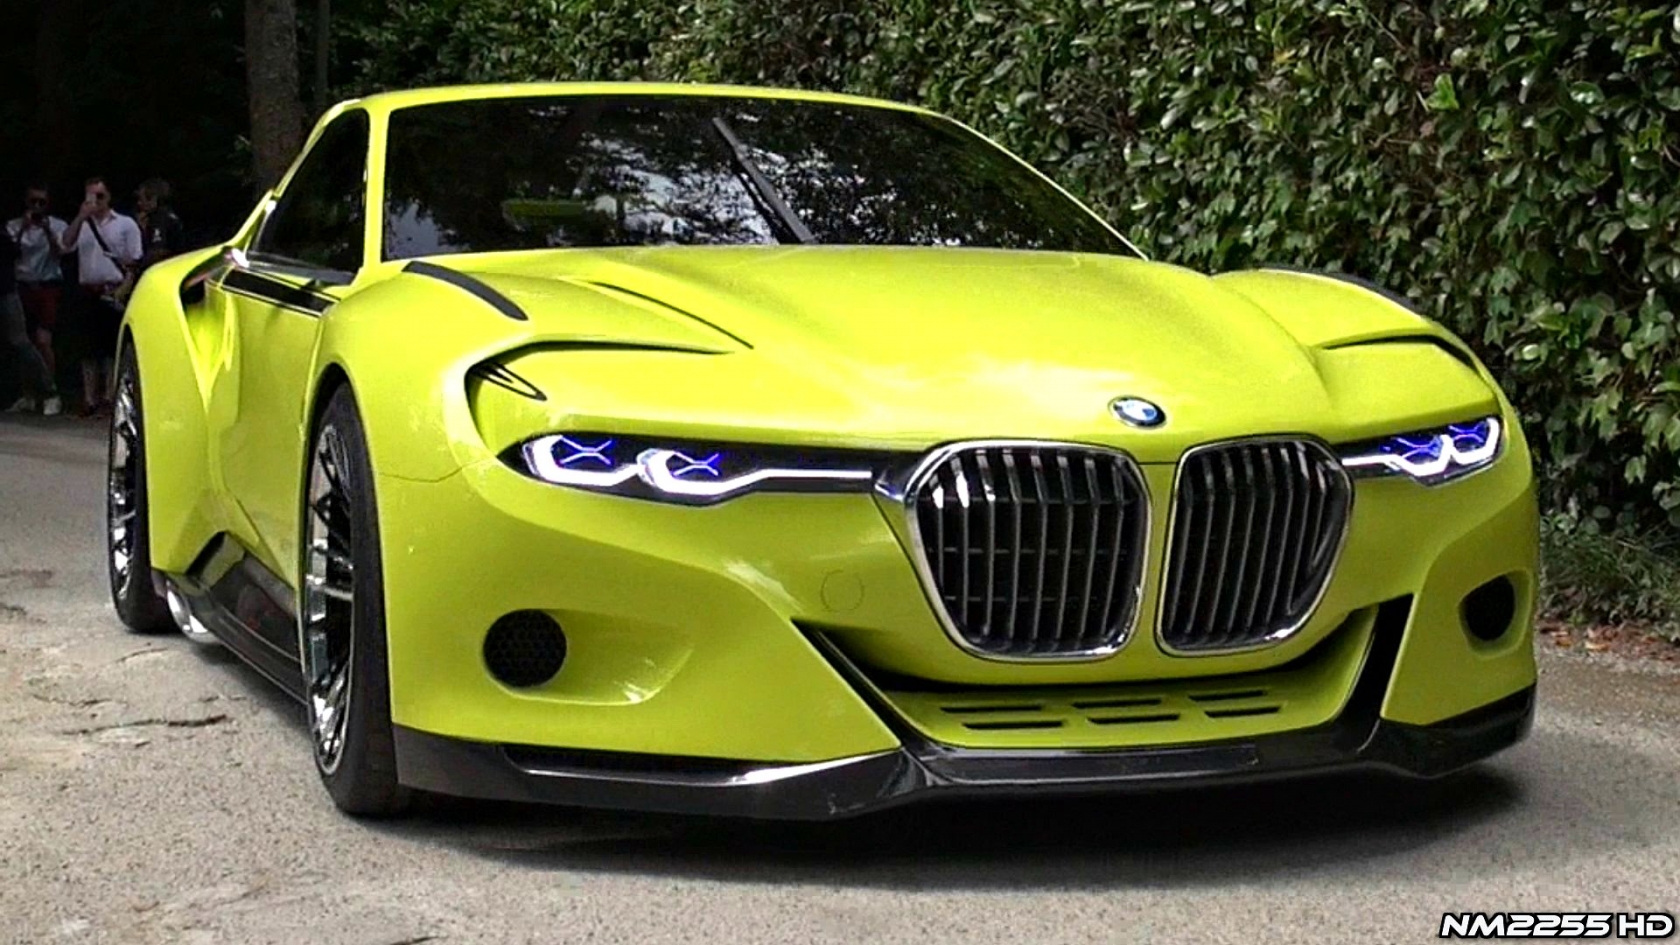 BMW 3.0 CSL Hommage R эталон красоты и стиля